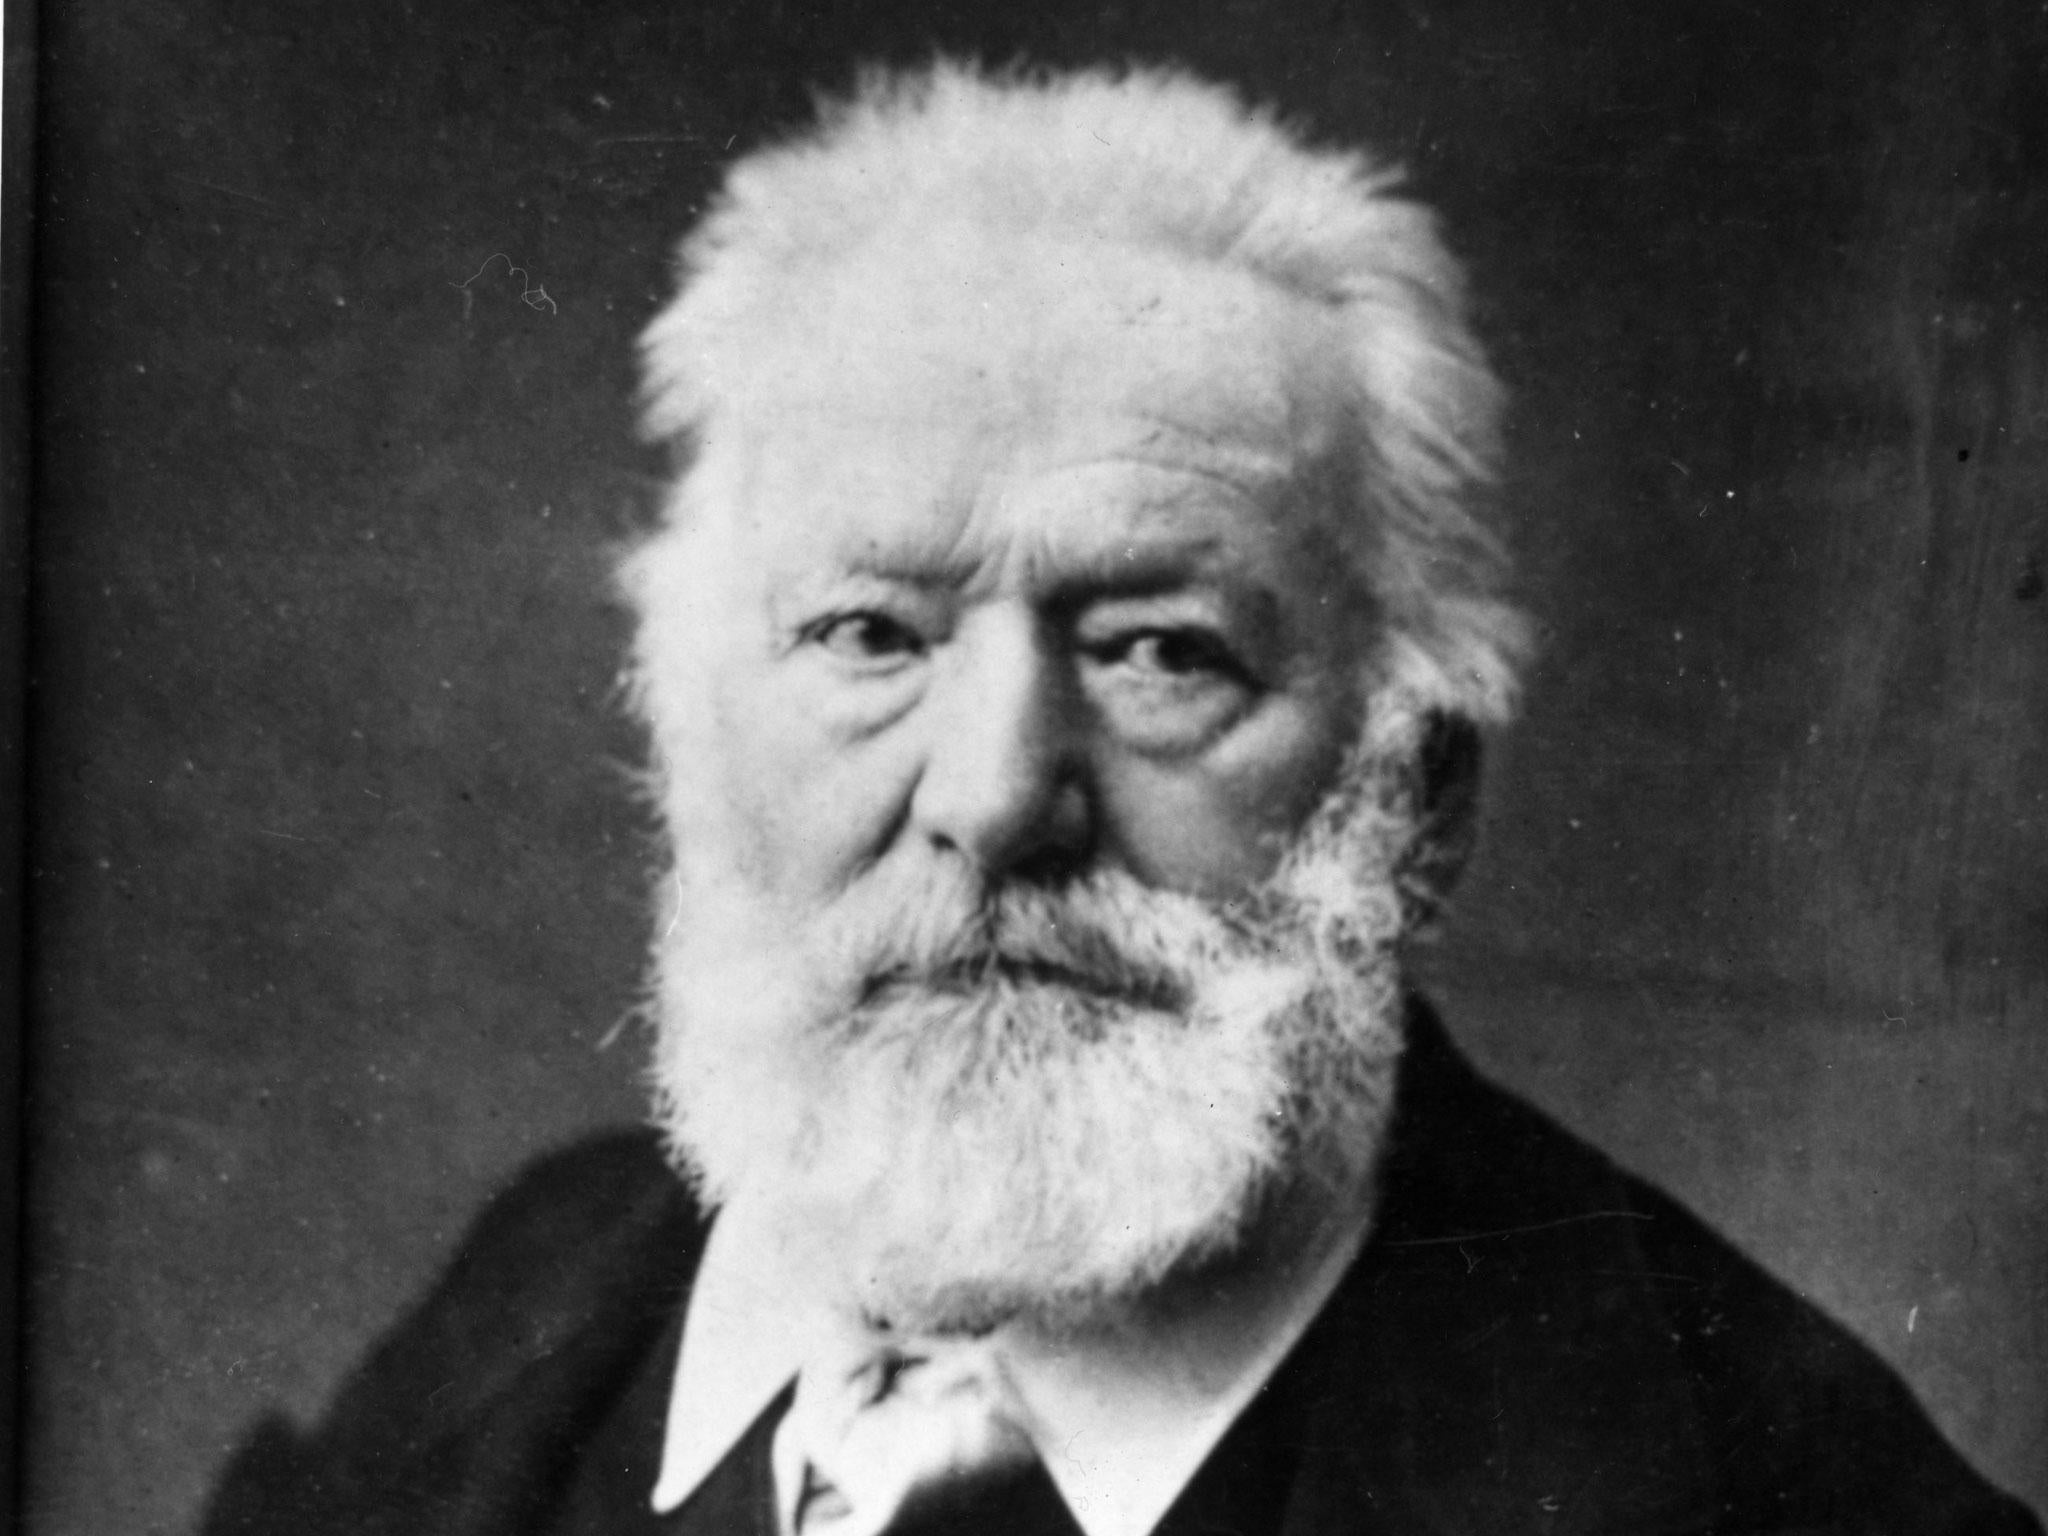 Victor Hugo image